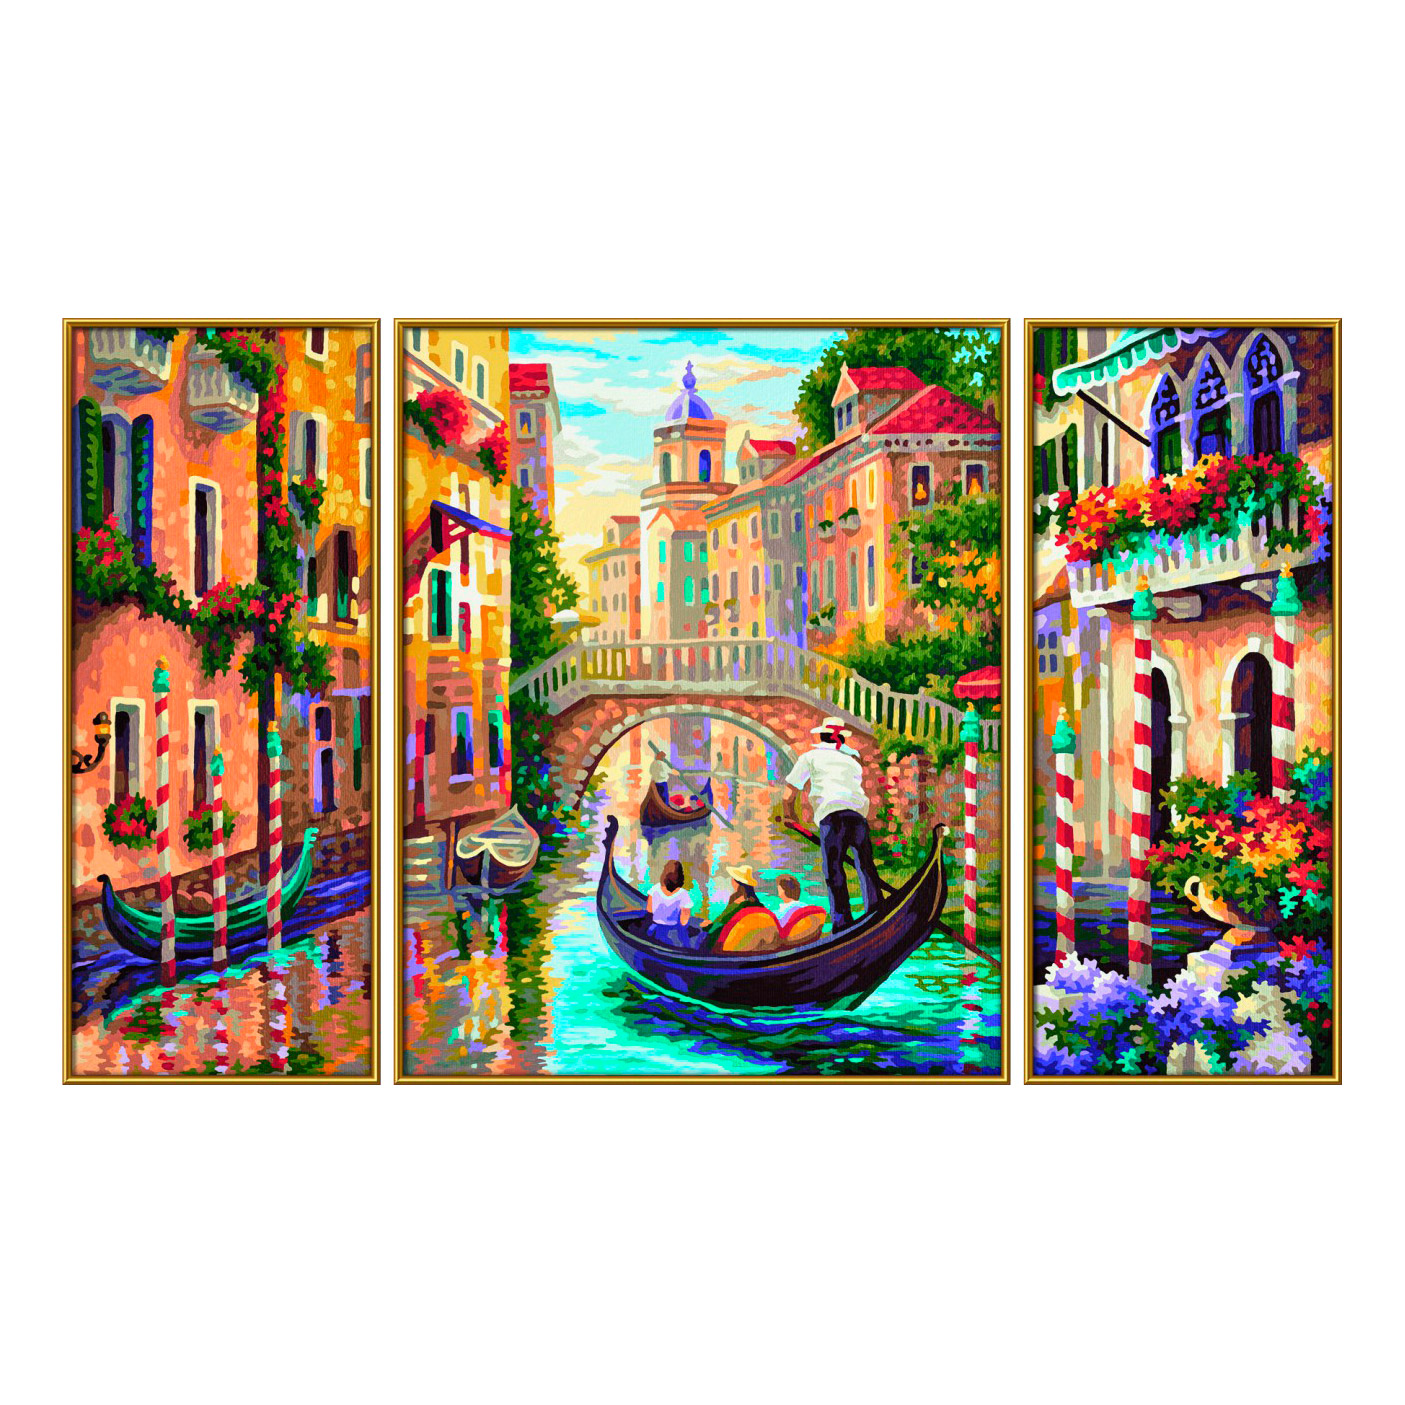 Три картины по номерам. Шиппер Венеция. Schipper картина по номерам "Венеция - город в лагуне" 50х80 см. Шиппер триптих. Картина по номерам шиппер Венеция.